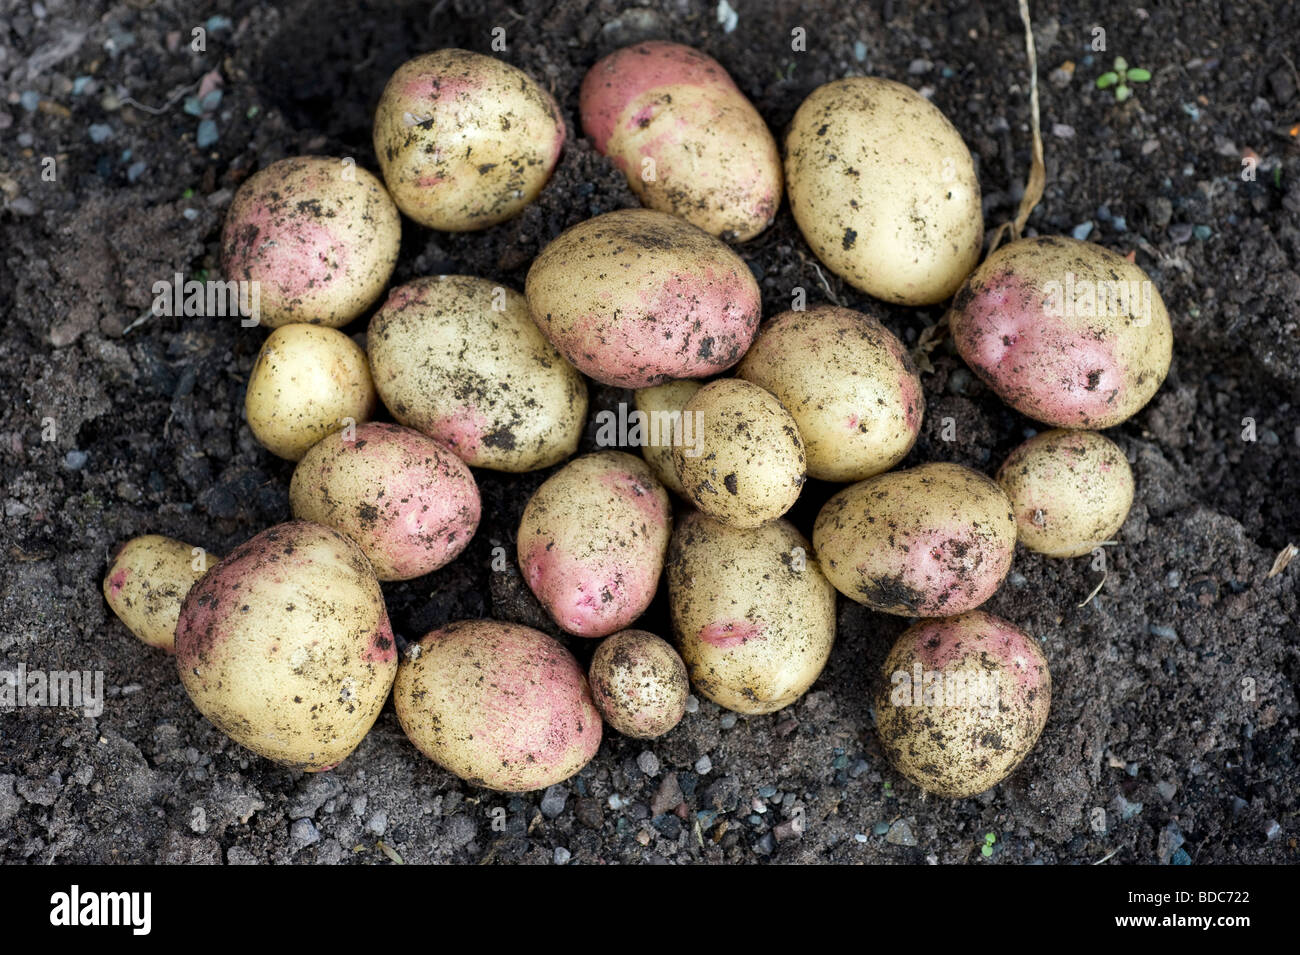 Potato king edward hi-res stock photography and images - Alamy